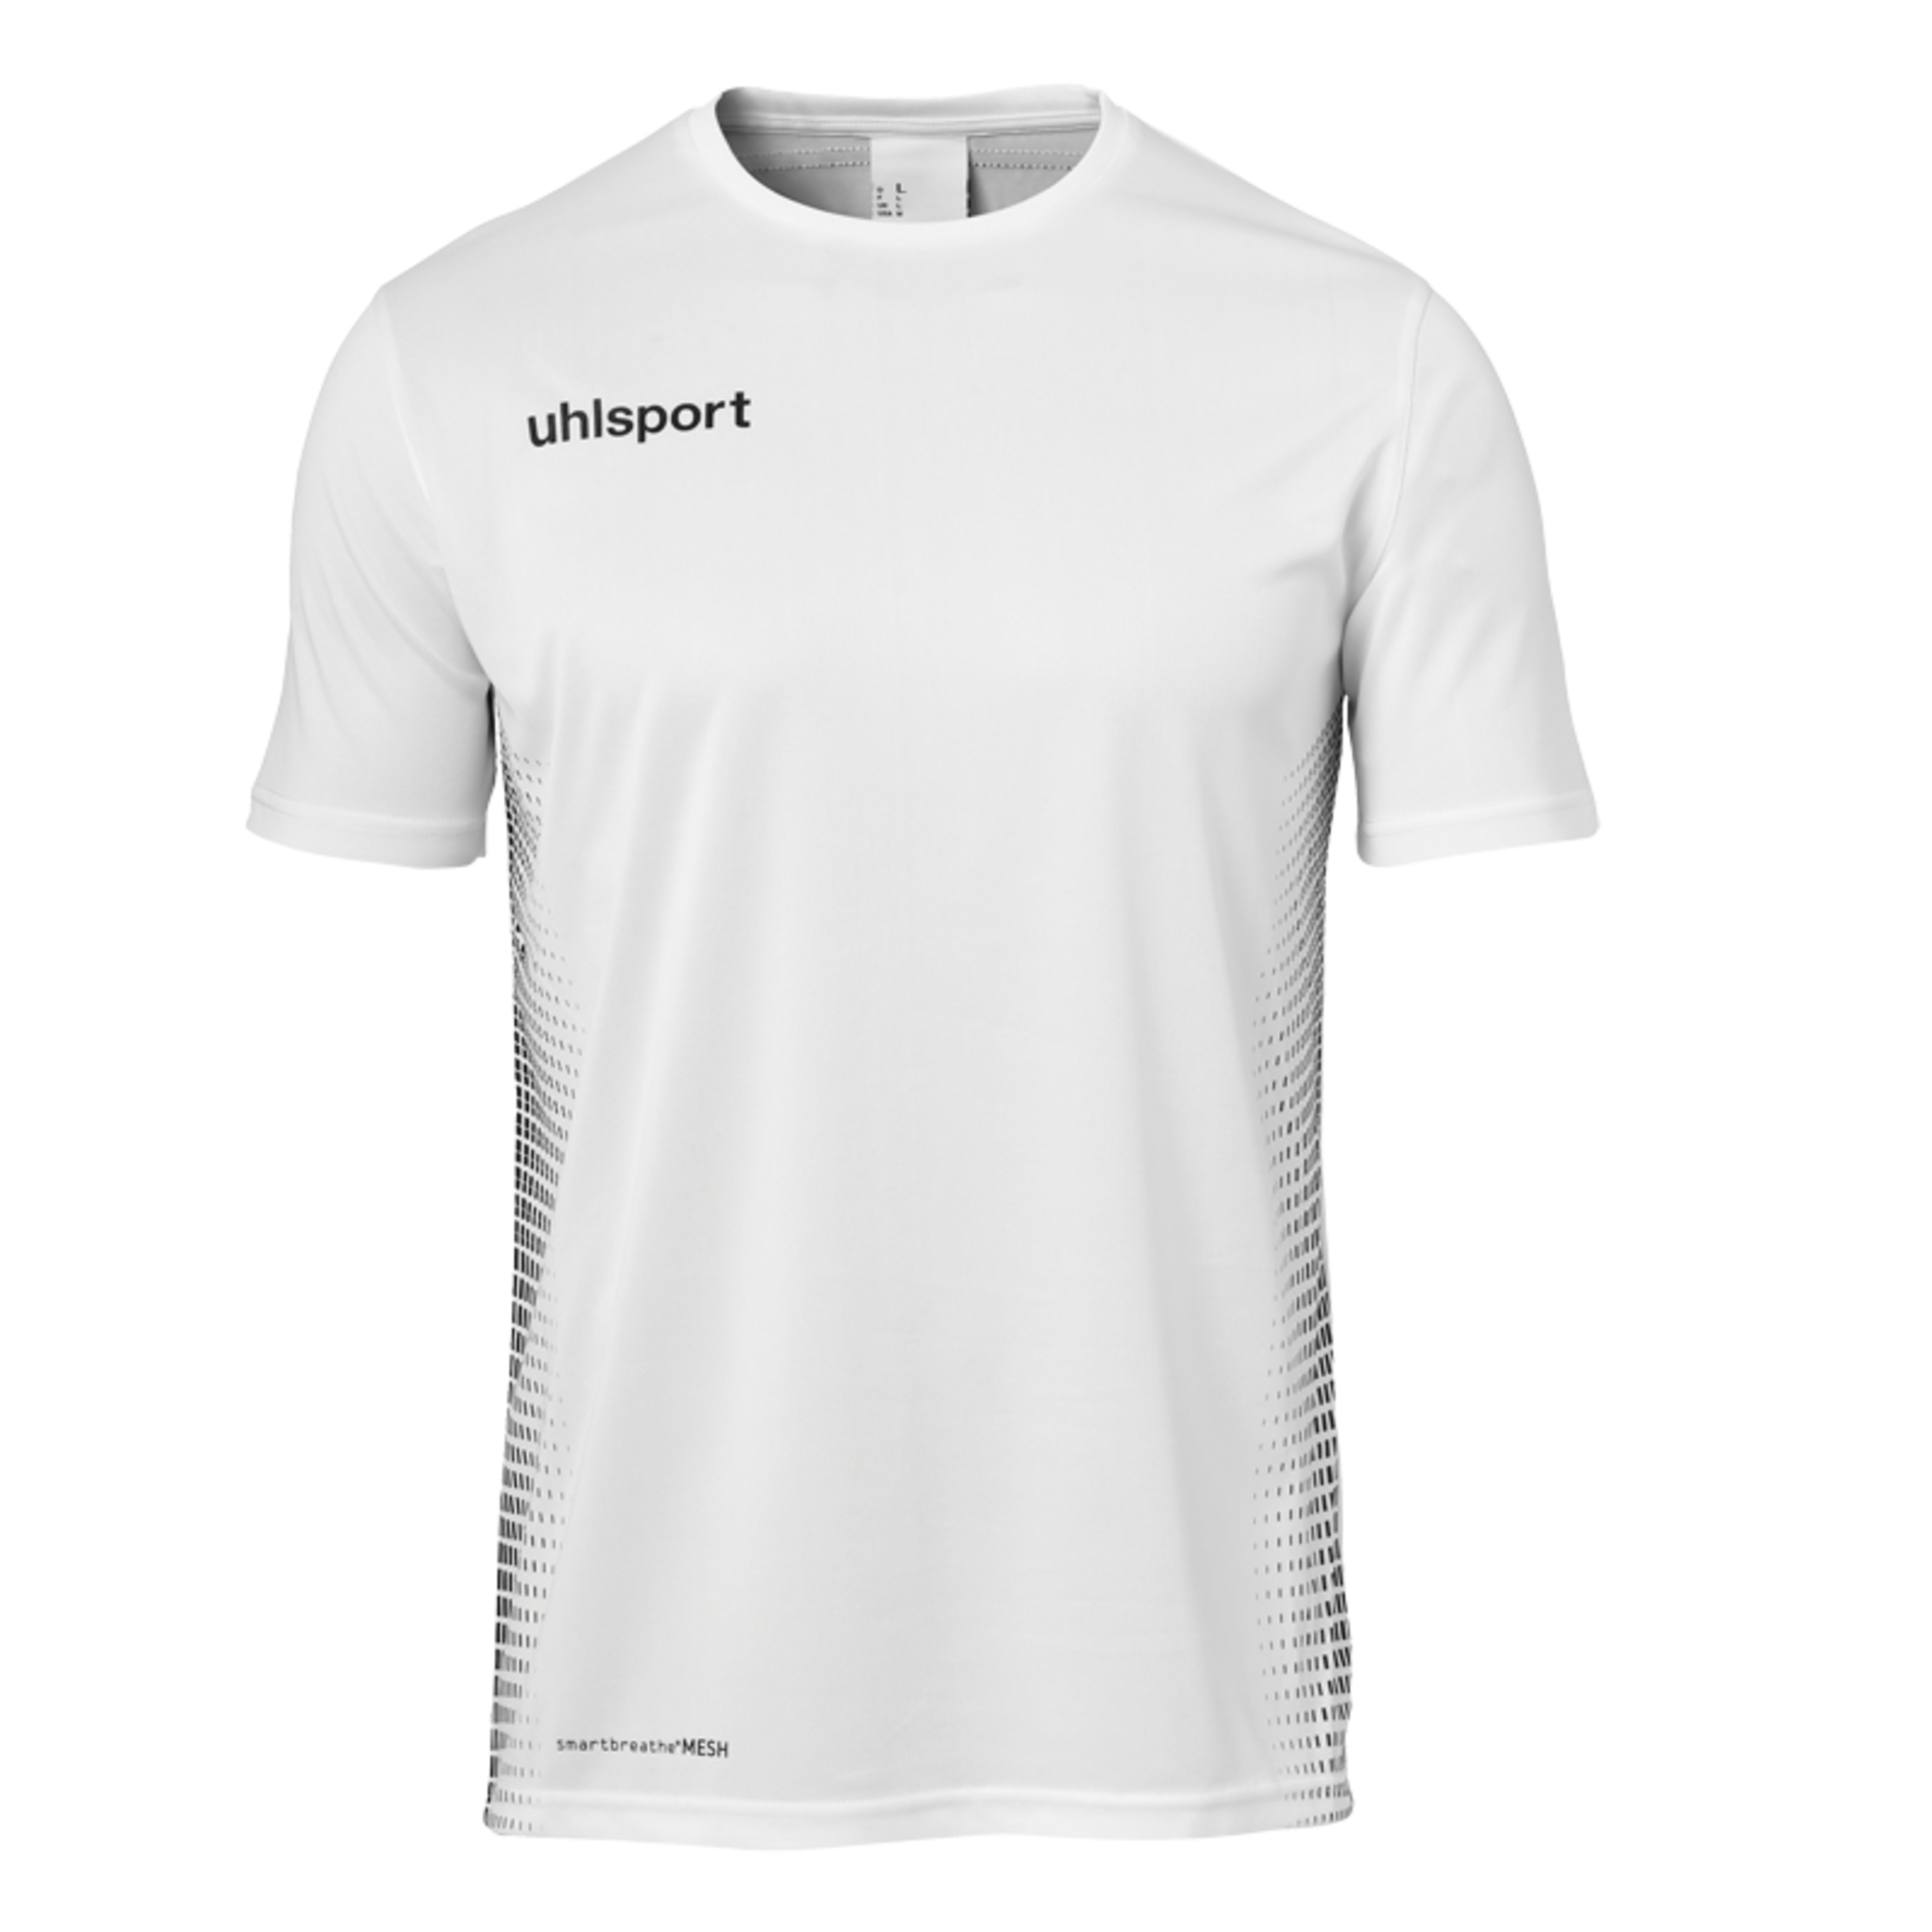 Camiseta Y Pantalón Uhlsport Score Kit Ss - Negro/Blanco - Score Kit Ss Blanco/negro Uhlsport  MKP